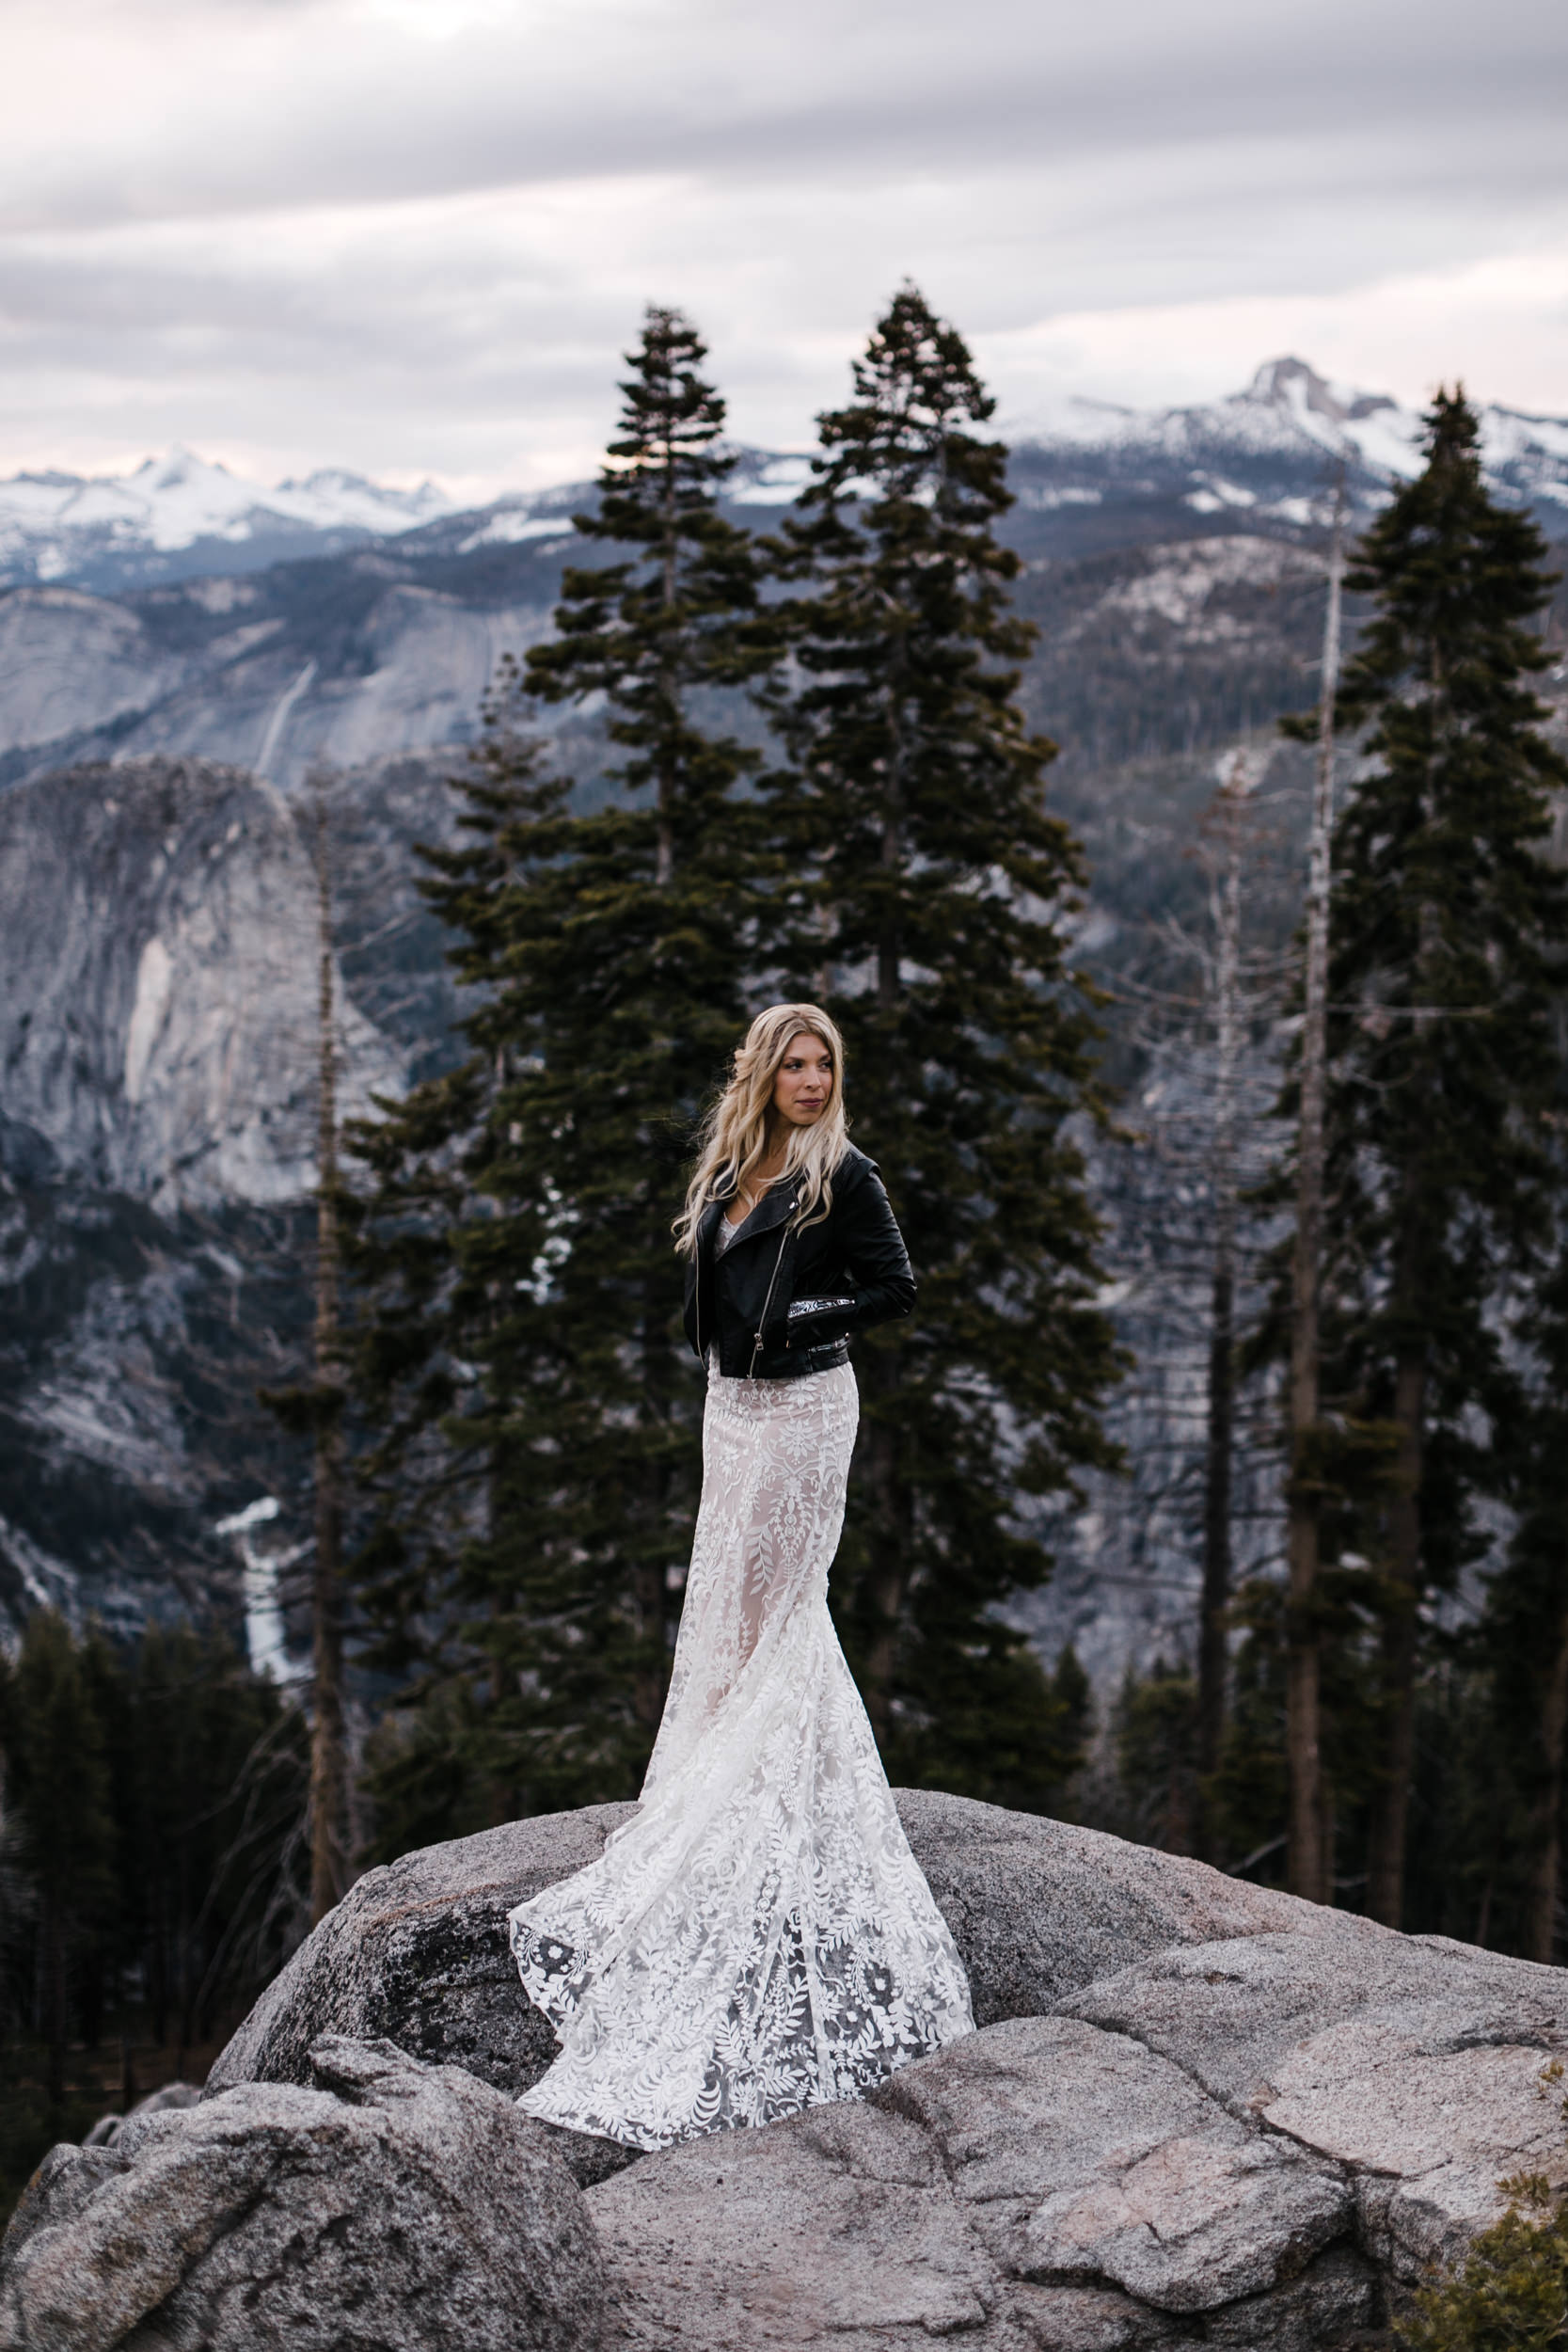 Erika + Grant’s intimate Yosemite National Park destination wedding + romantic backyard reception under twinkle lights | glacier point sunrise first look | the hearnes adventure photography 